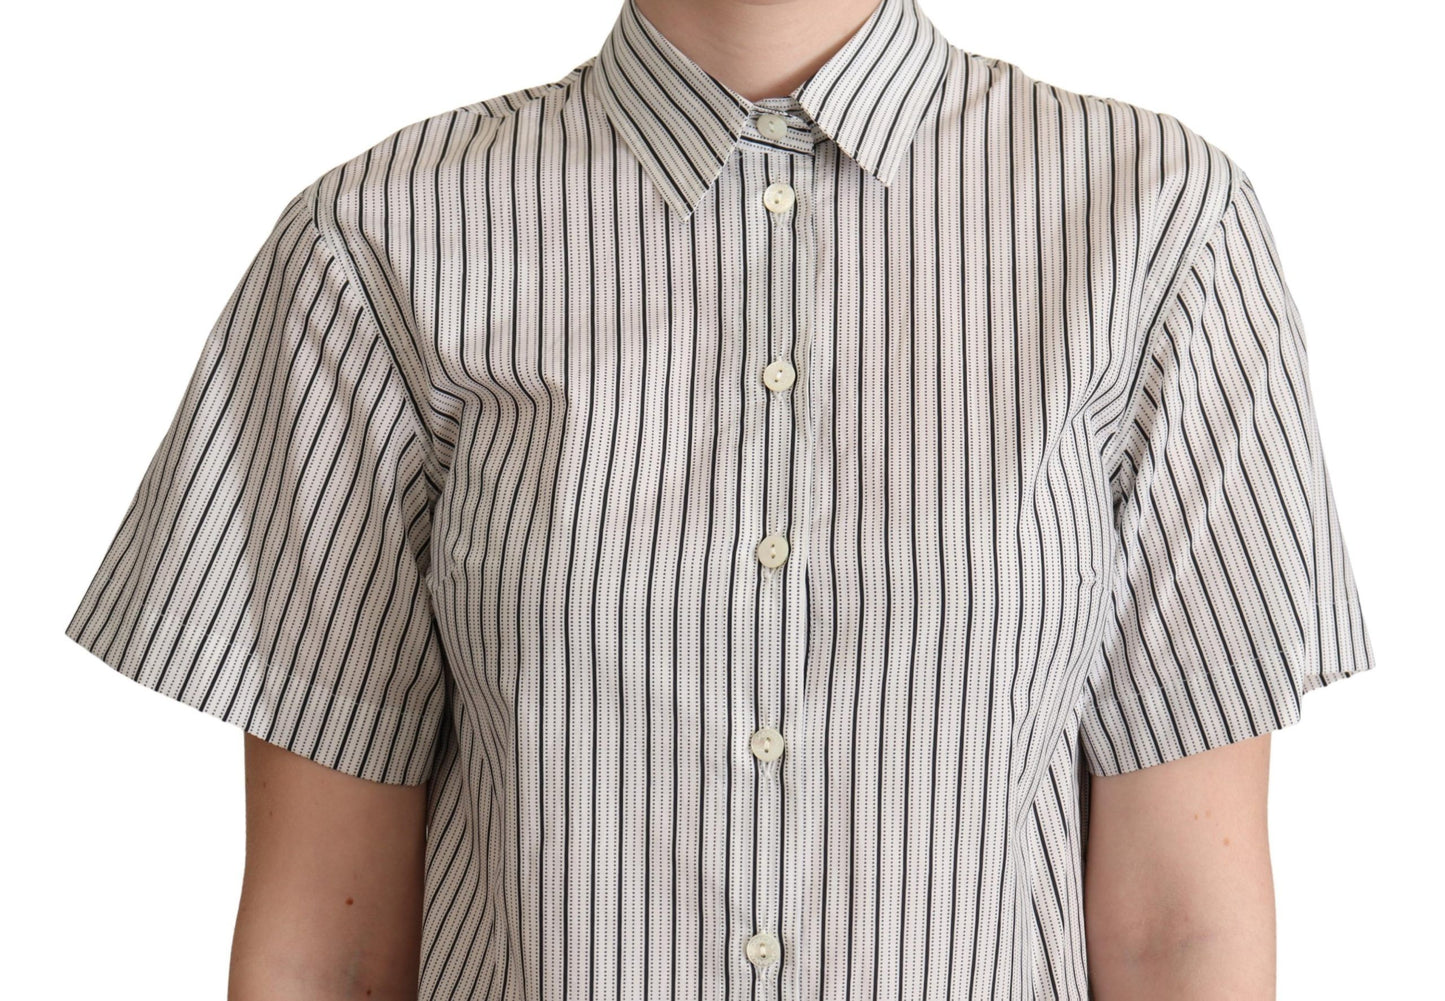 Dolce & Gabbana Chic Monochrome Striped Polo Shirt